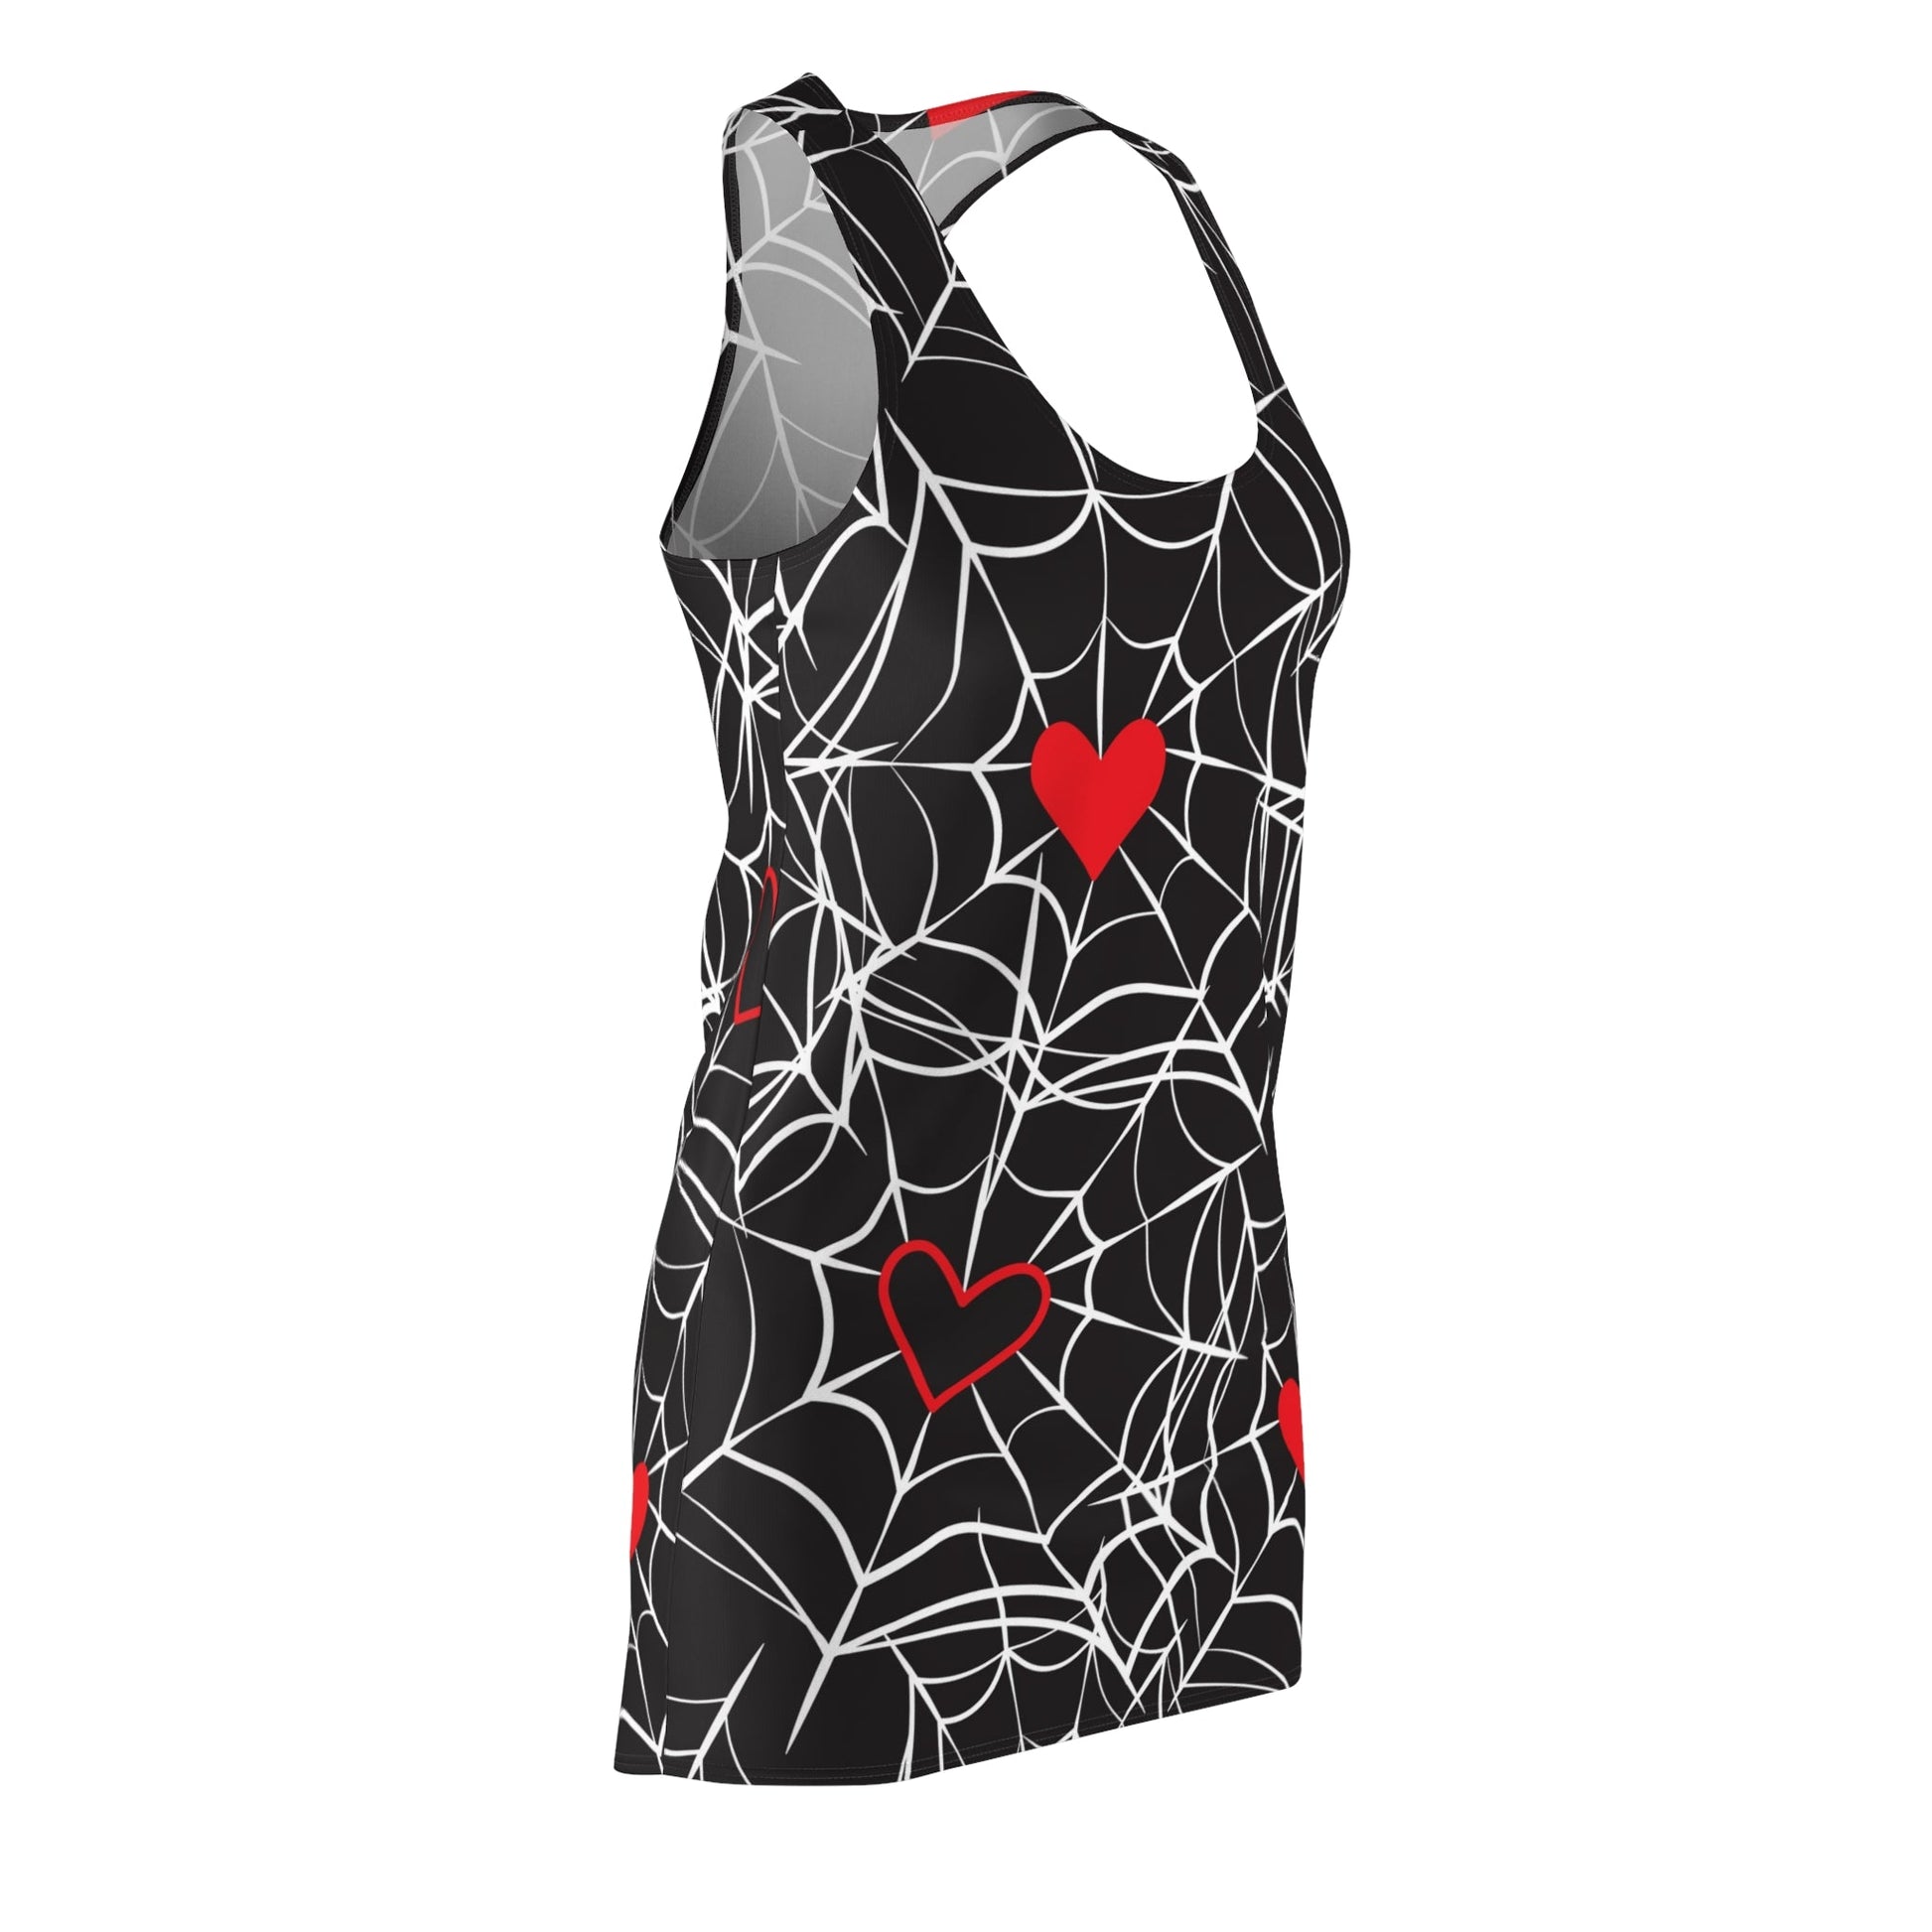 All Over Prints - Women's SpiderWebs Cut & Sew Racerback Dress